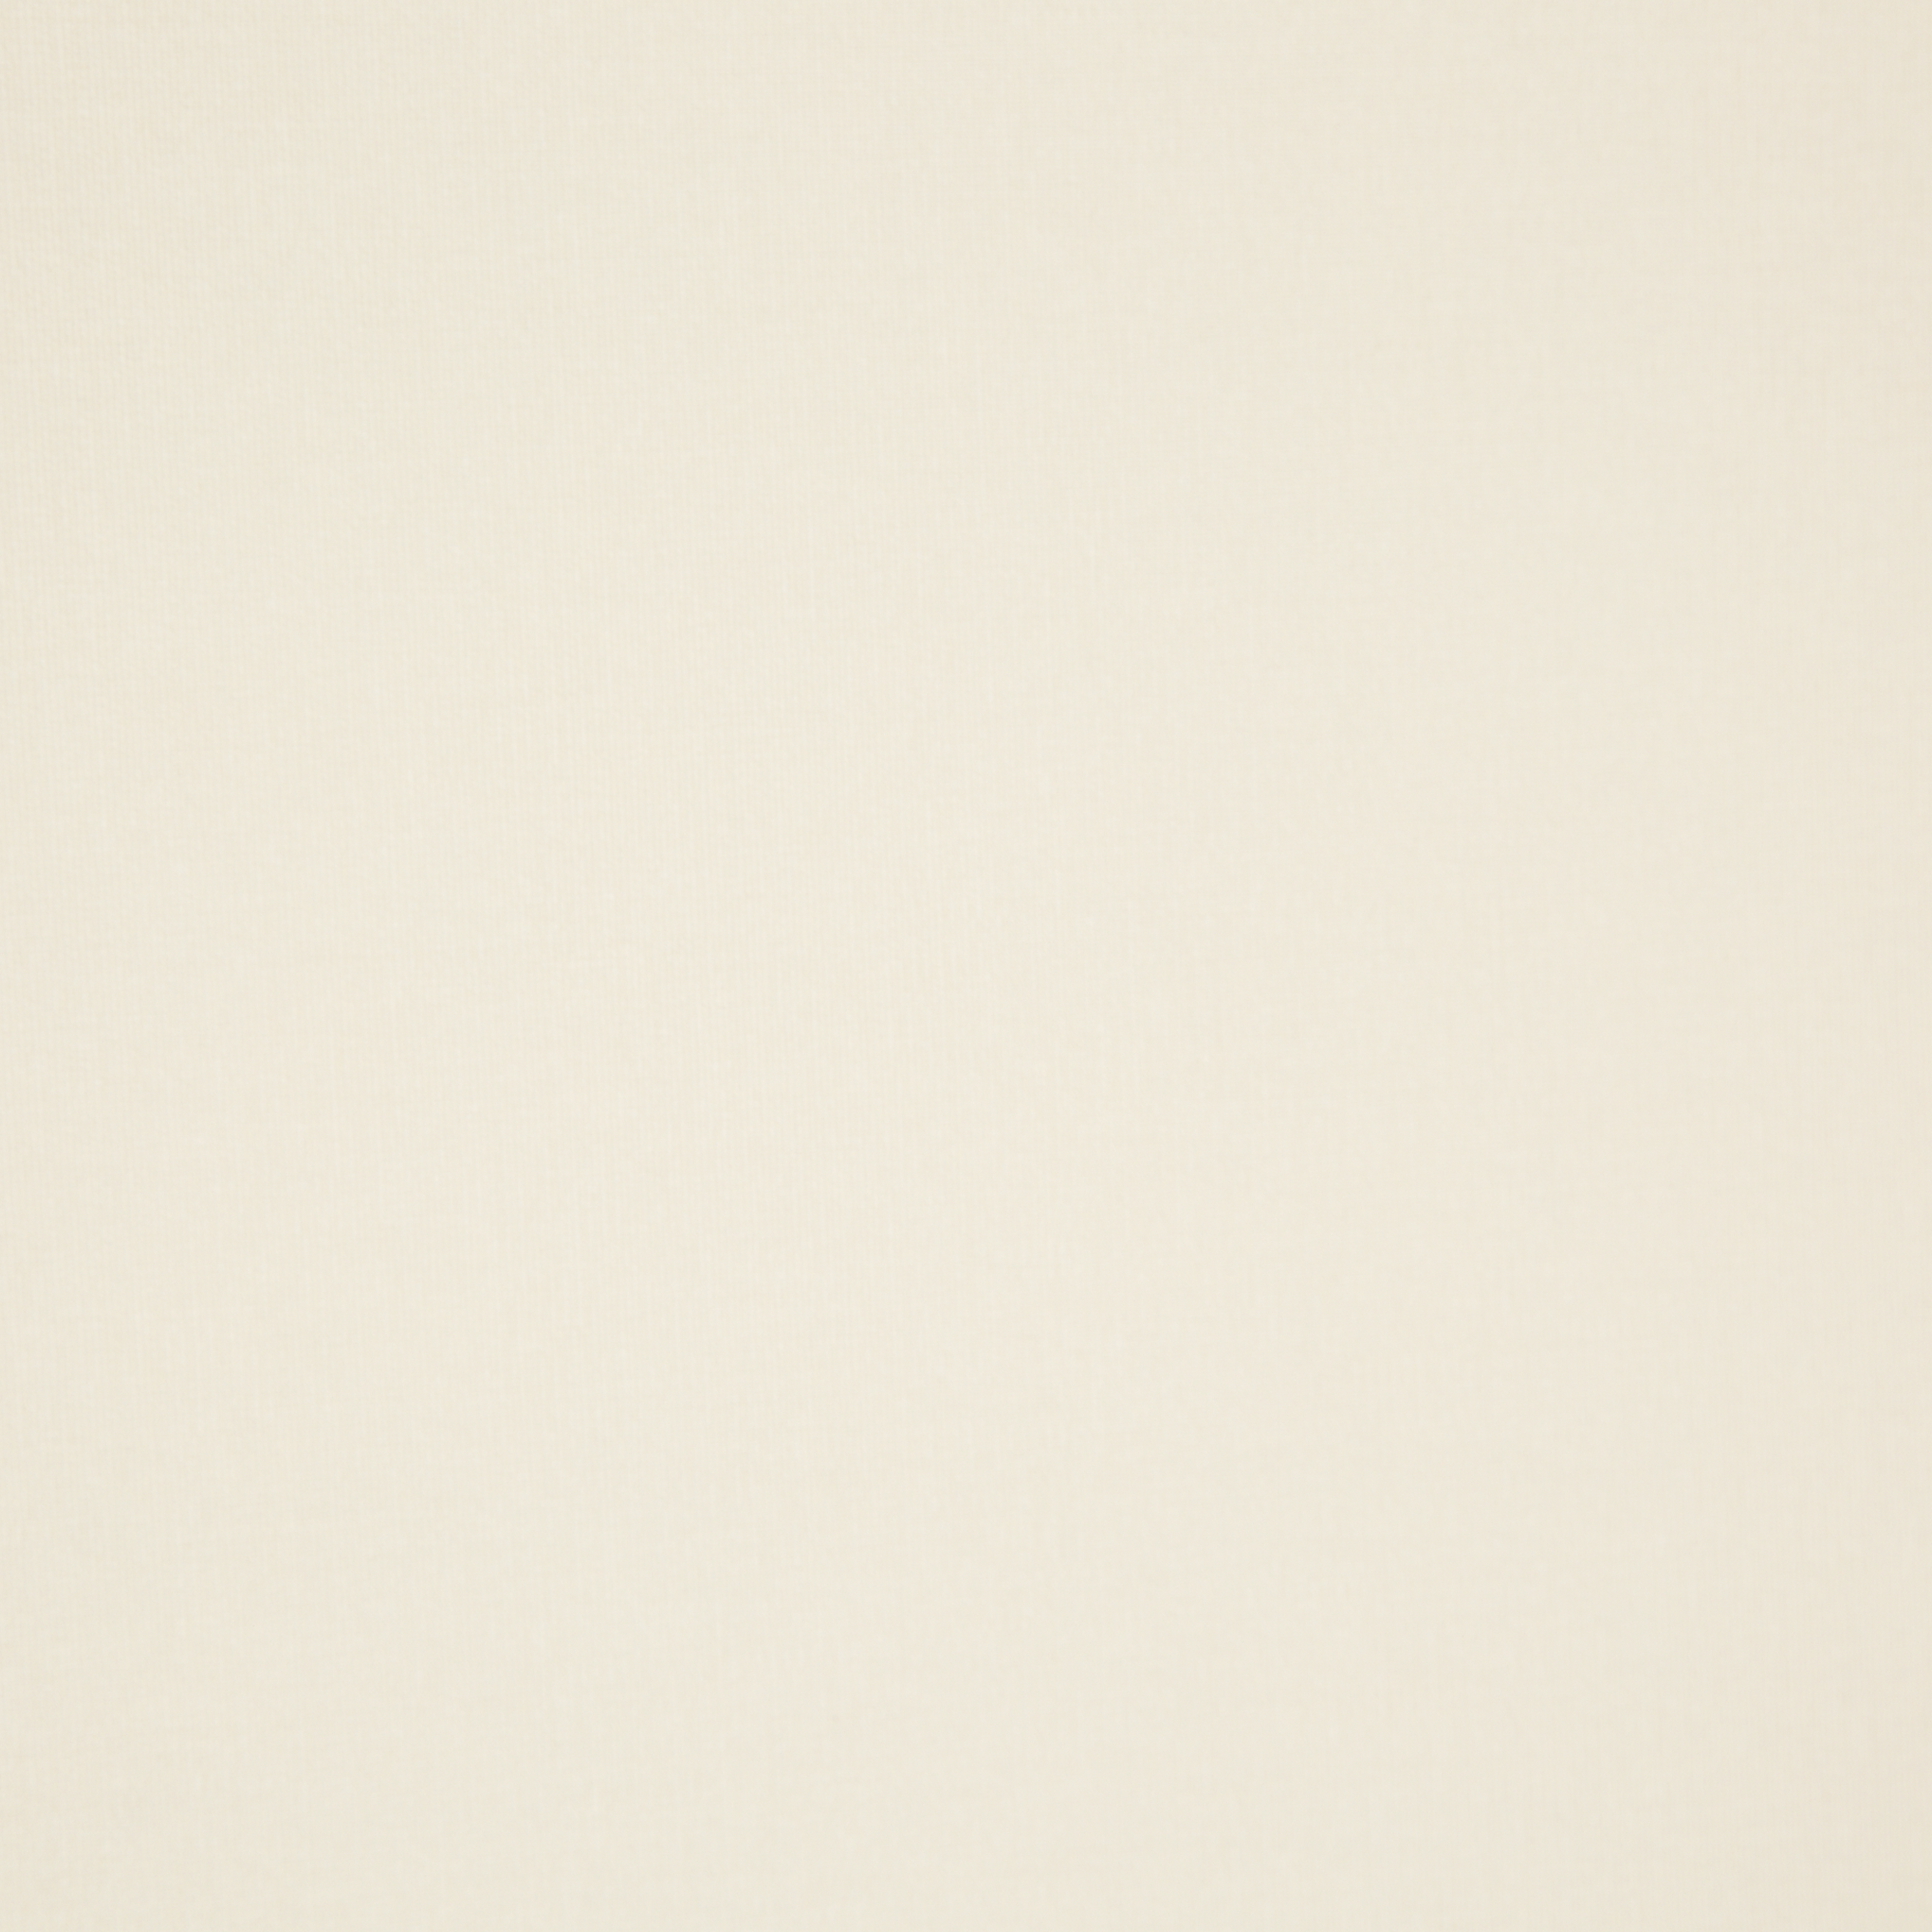 Seitenzug-Rollo 'Abdunklung' creme 112 x 180 cm + product picture